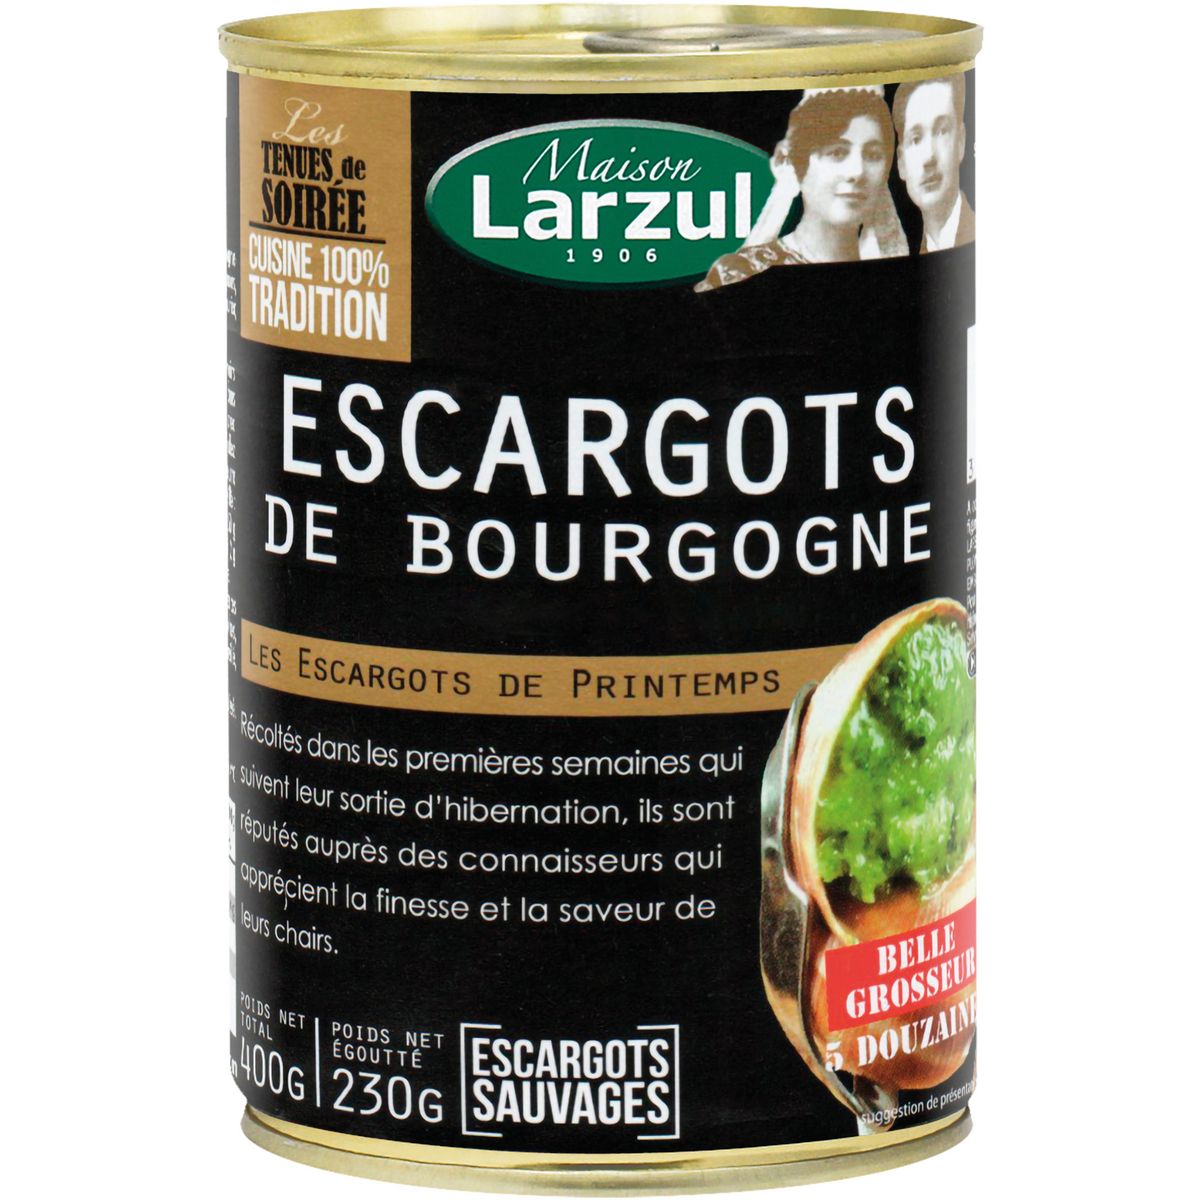 LARZUL Escargots de Bourgogne belle grosseur 60 escargots 400g pas